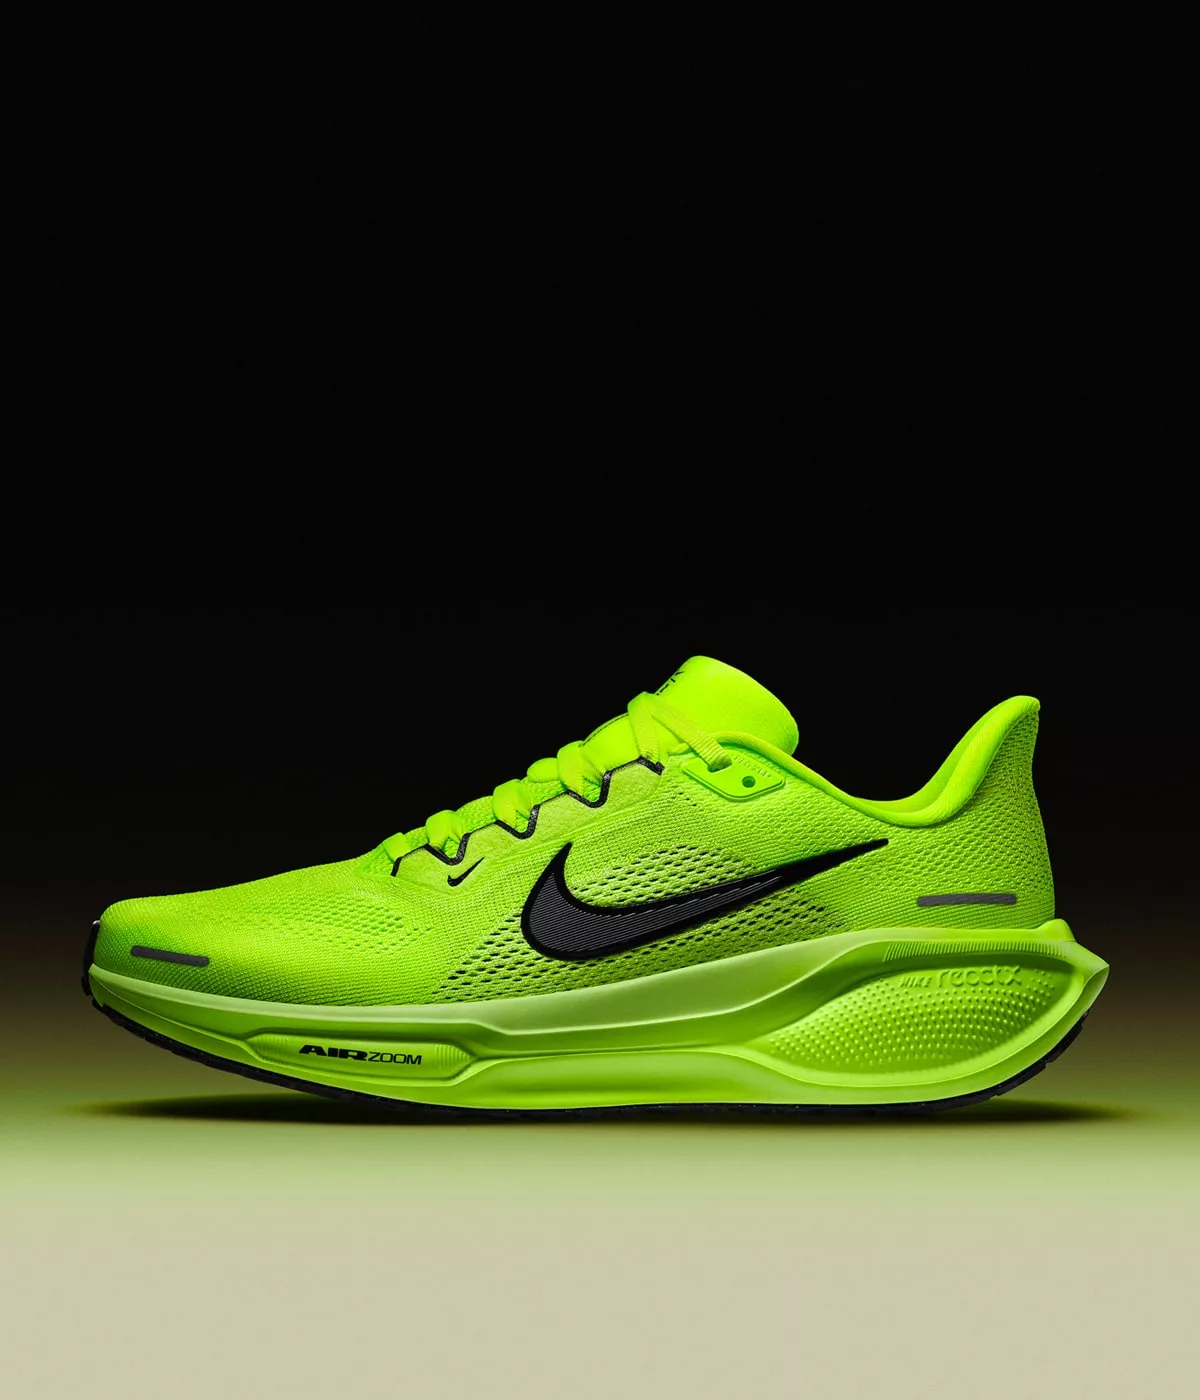 Baskets Nike vert fluo sur fond sombre.